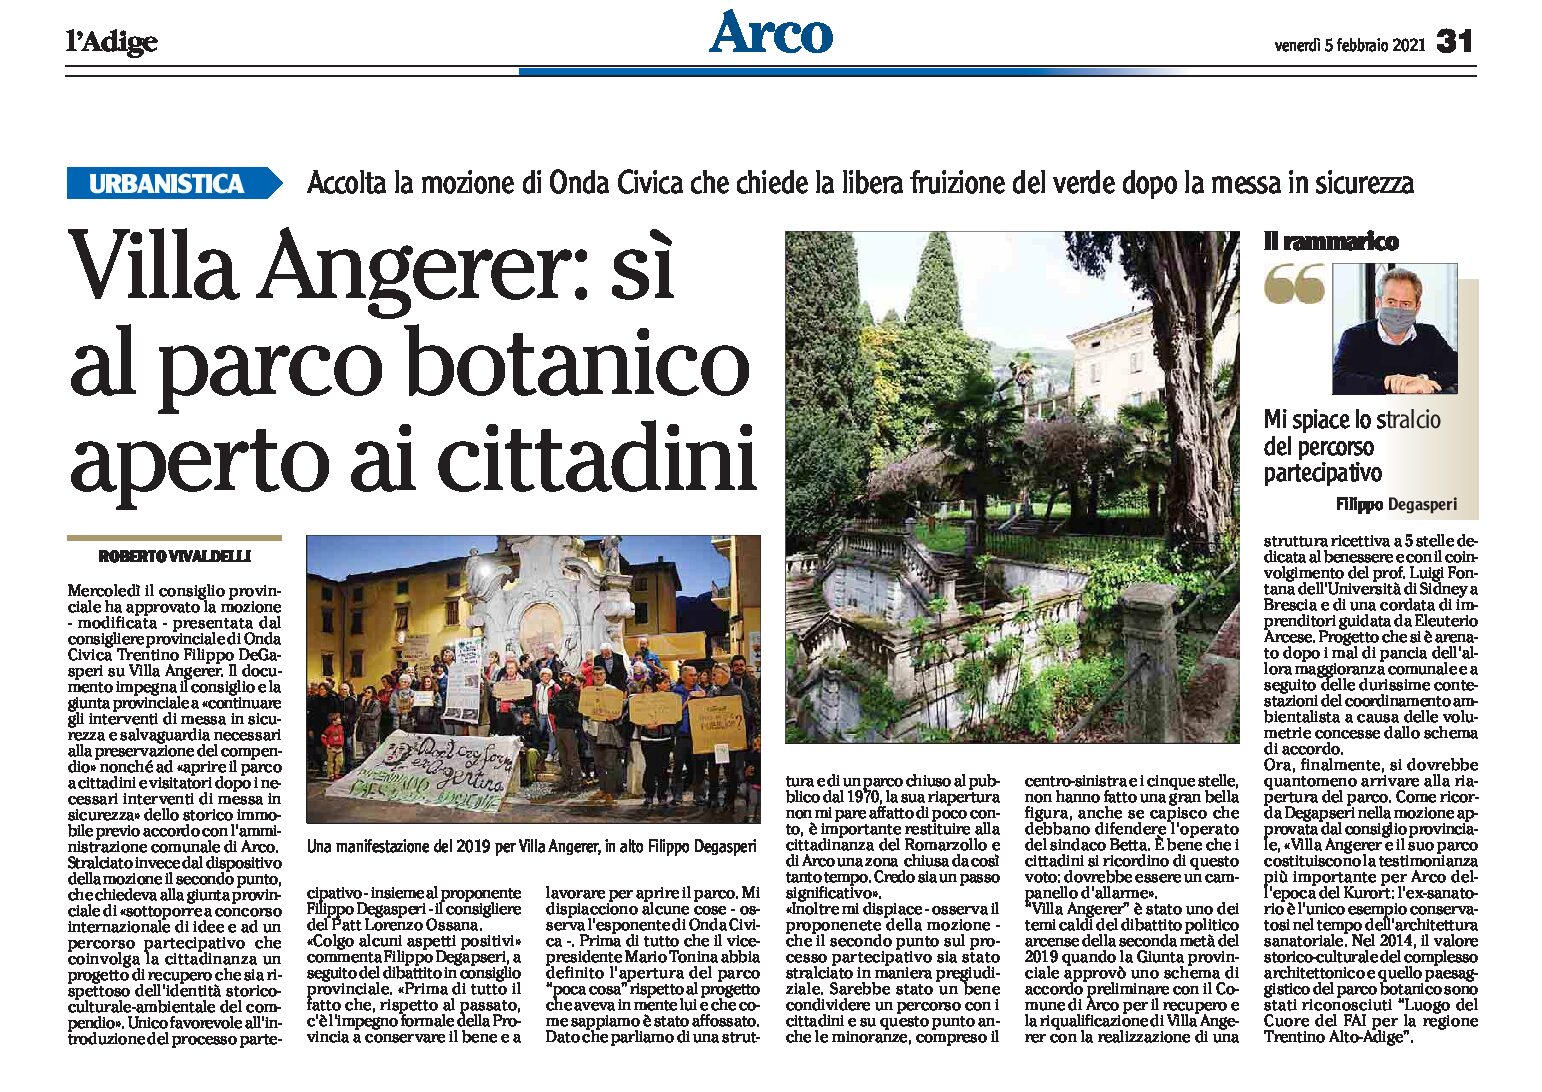 Arco, Villa Angerer: sì al parco botanico aperto ai cittadini